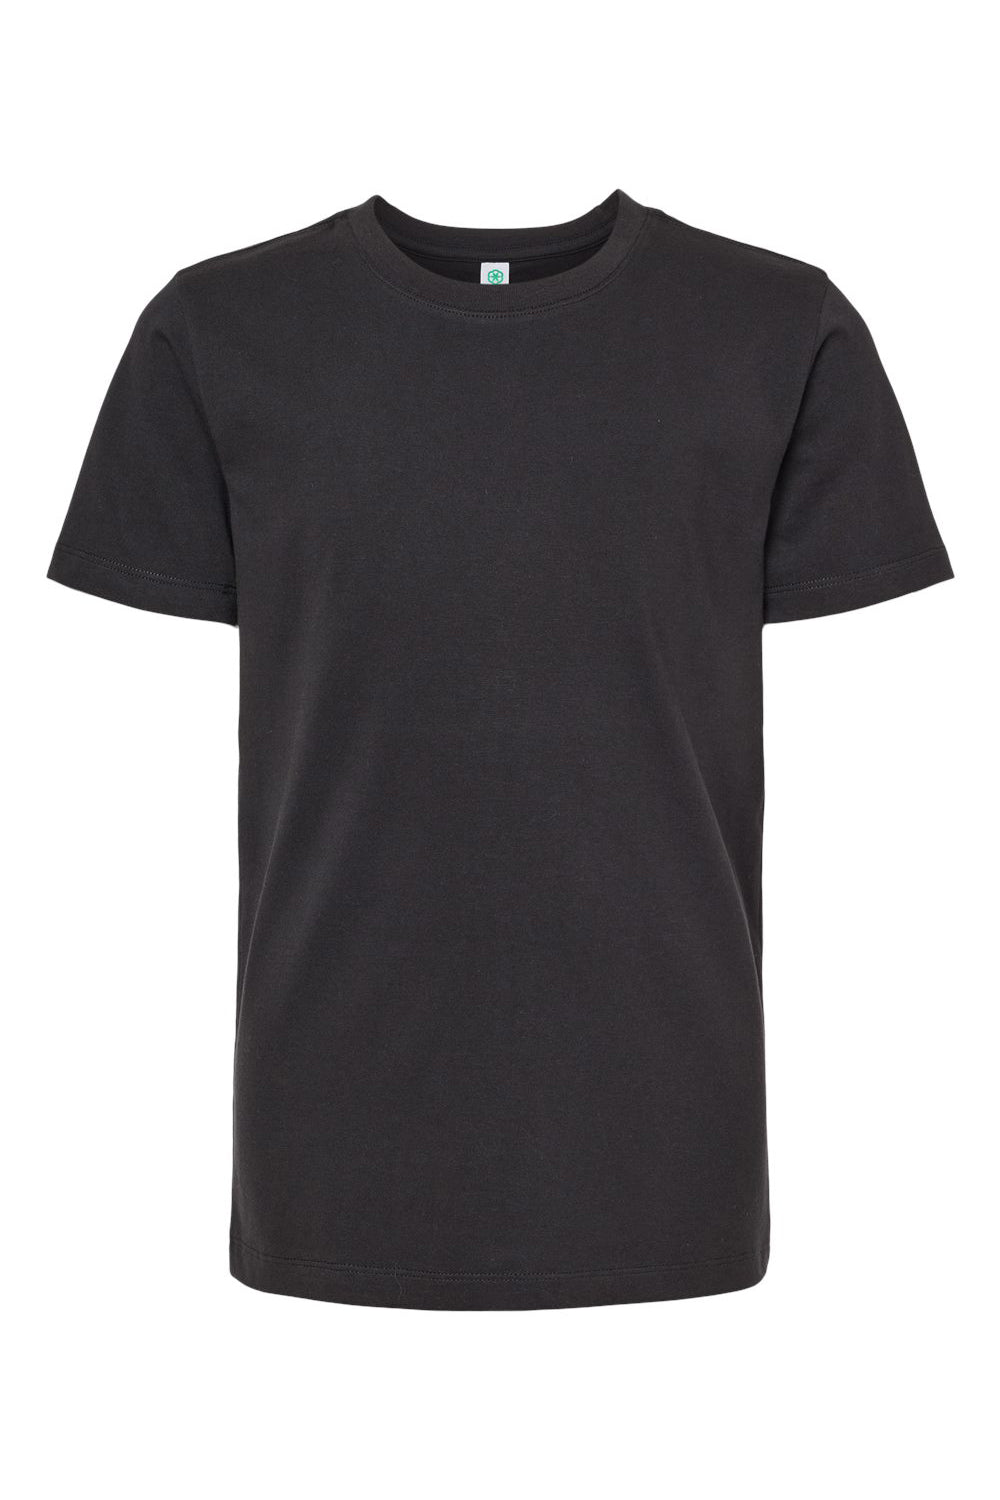 SoftShirts 402 Youth Organic Short Sleeve Crewneck T-Shirt Black Flat Front